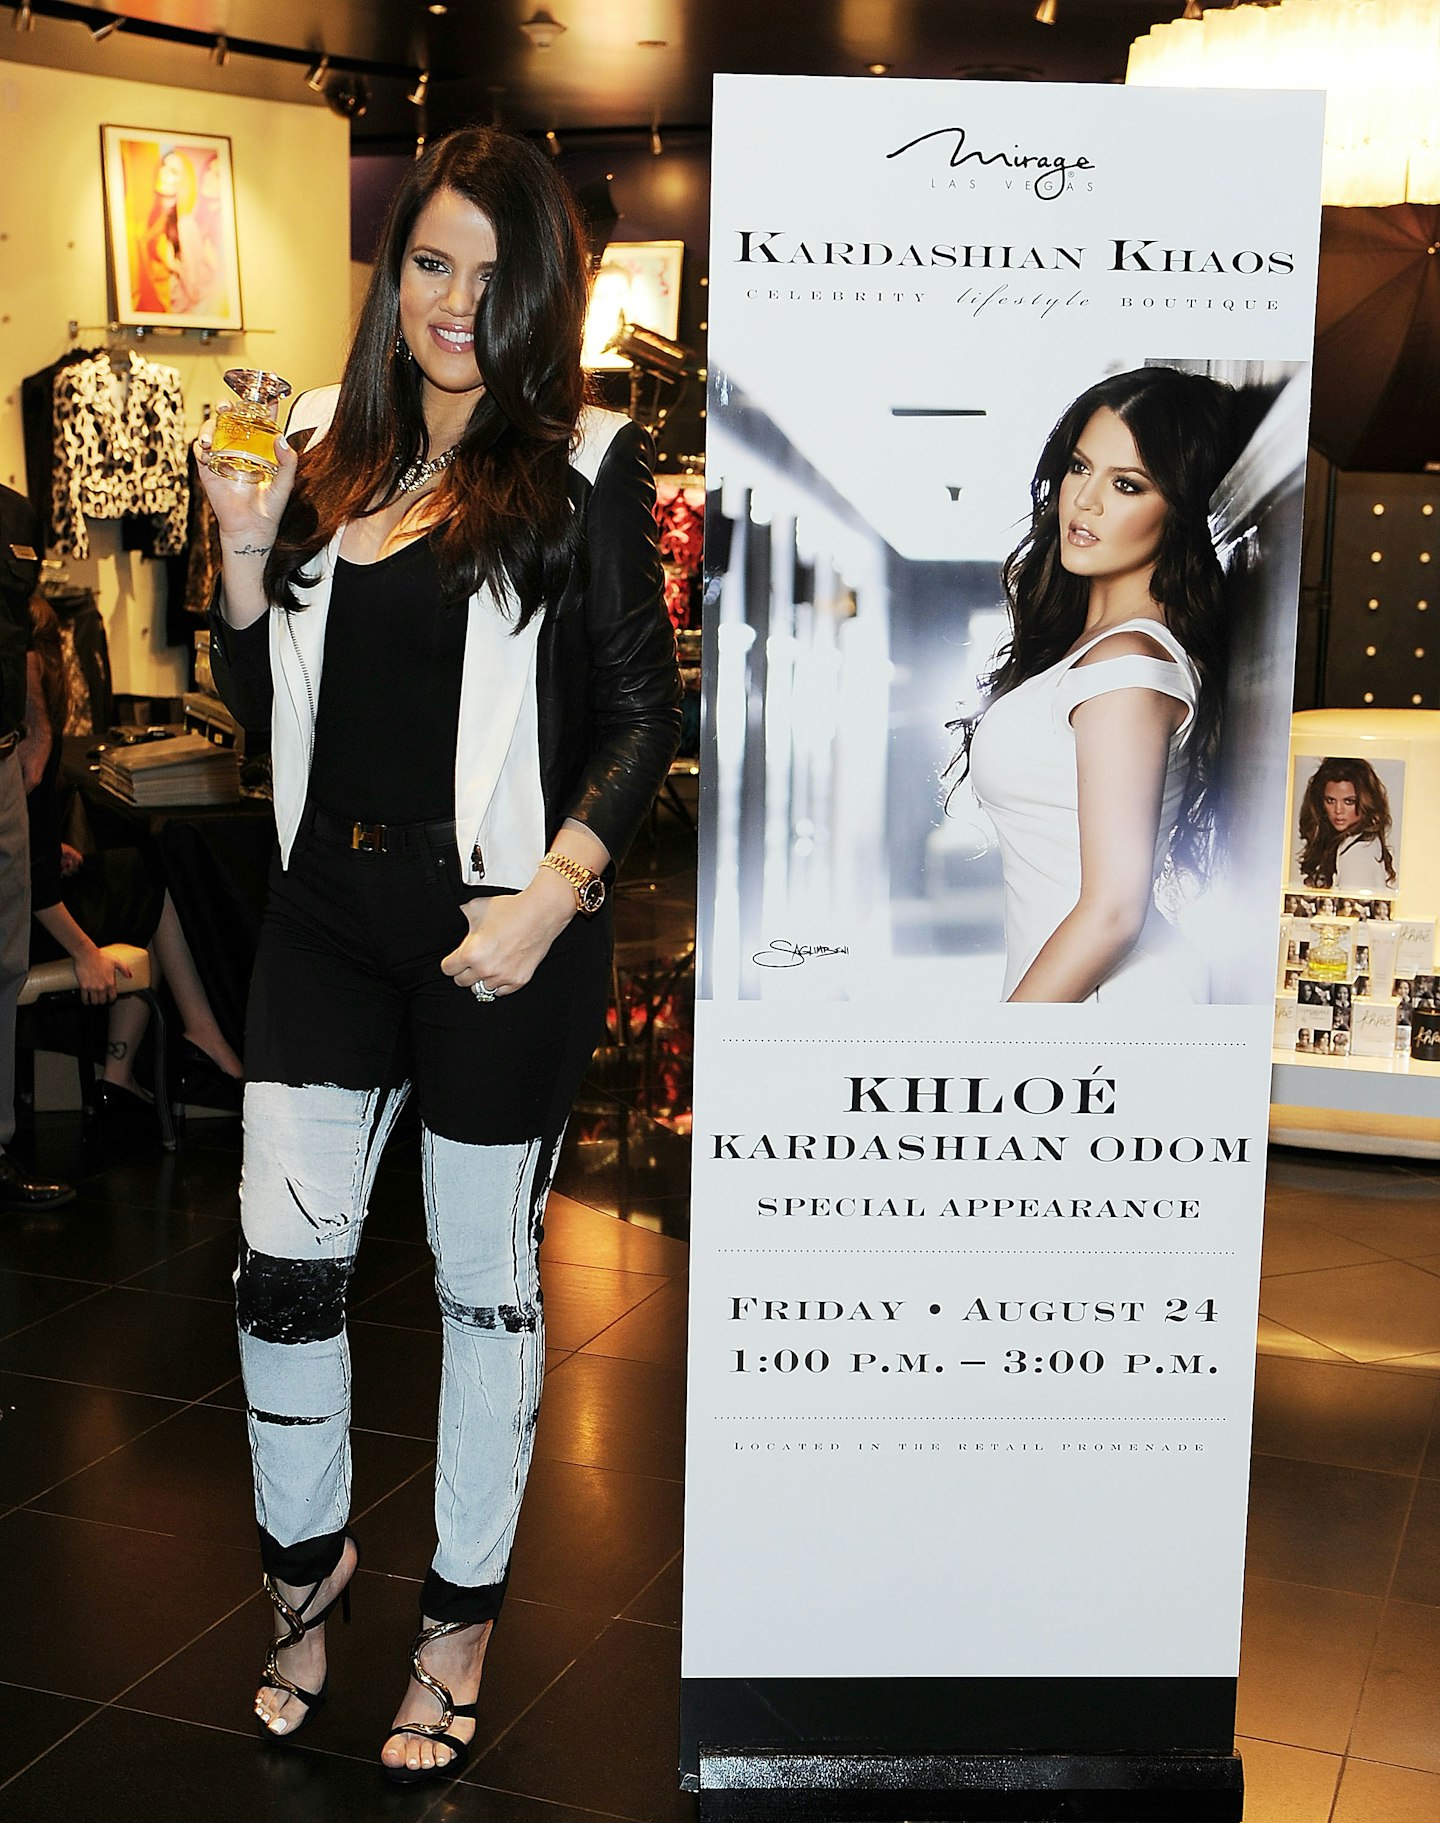 Khloe Kardashian 2012 (age 28)